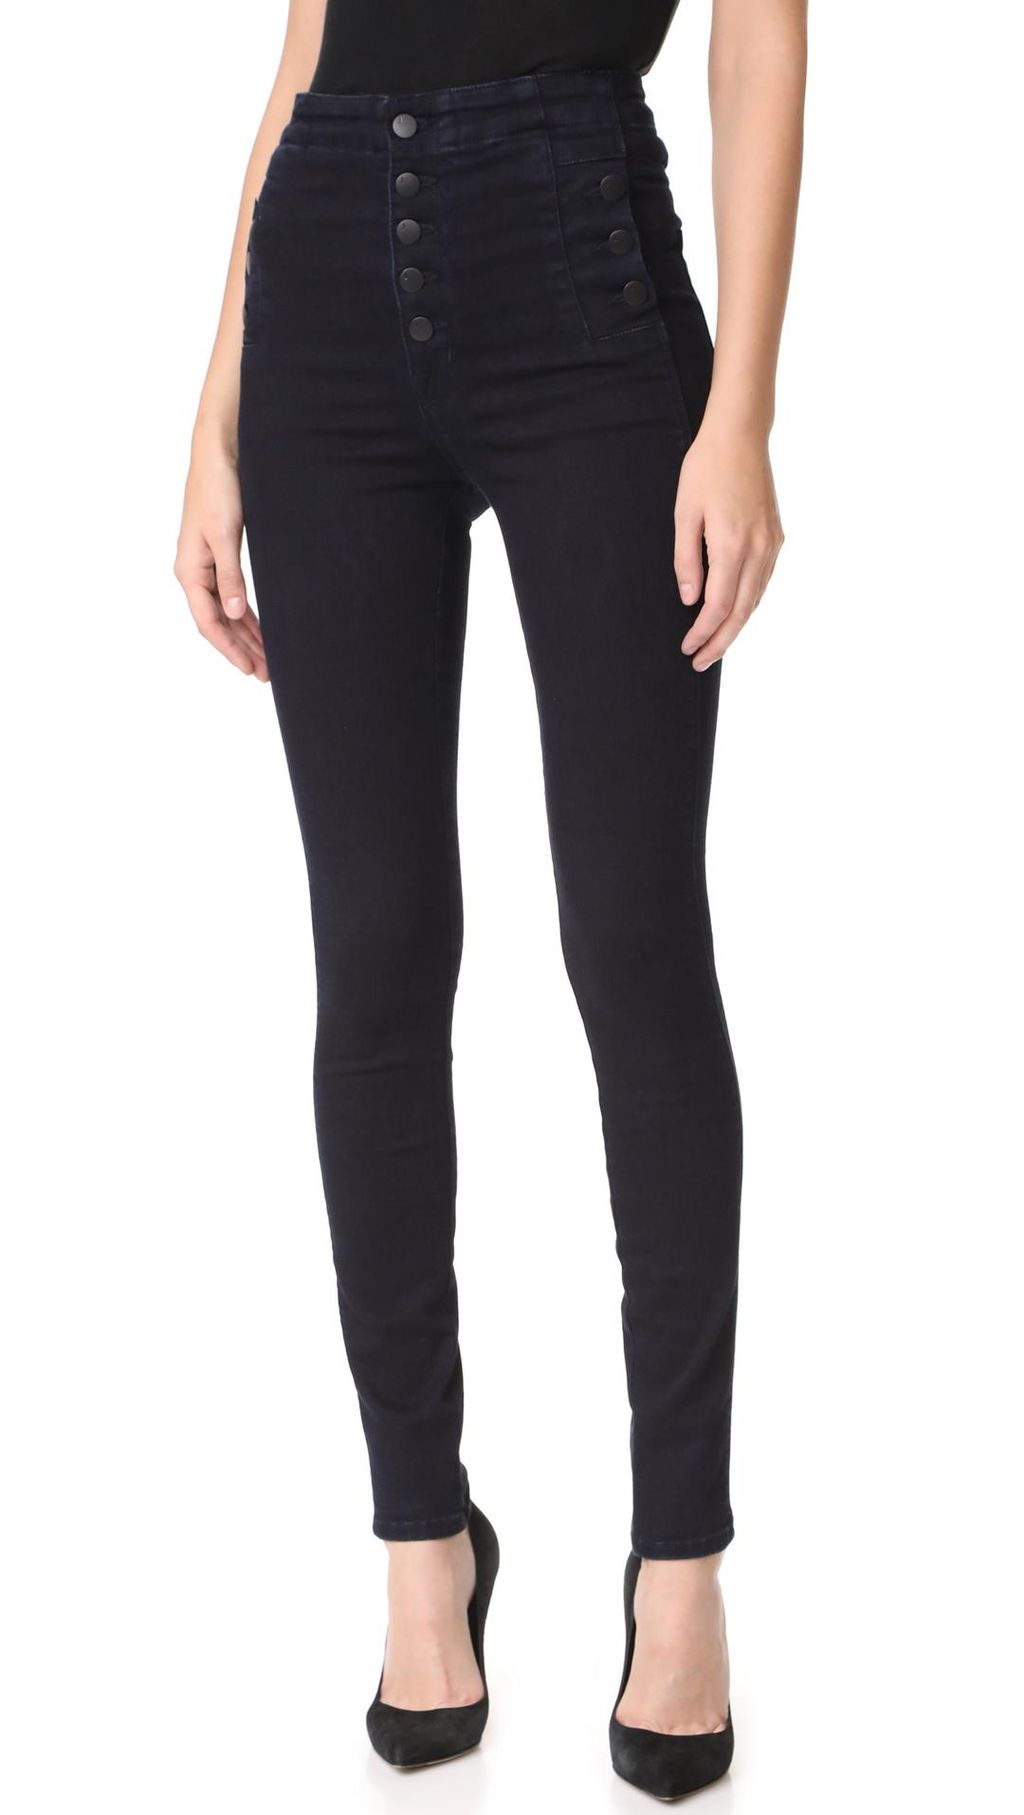 Shop Jennifer Lopez's Perfect Skinny Jeans | Who What Wear